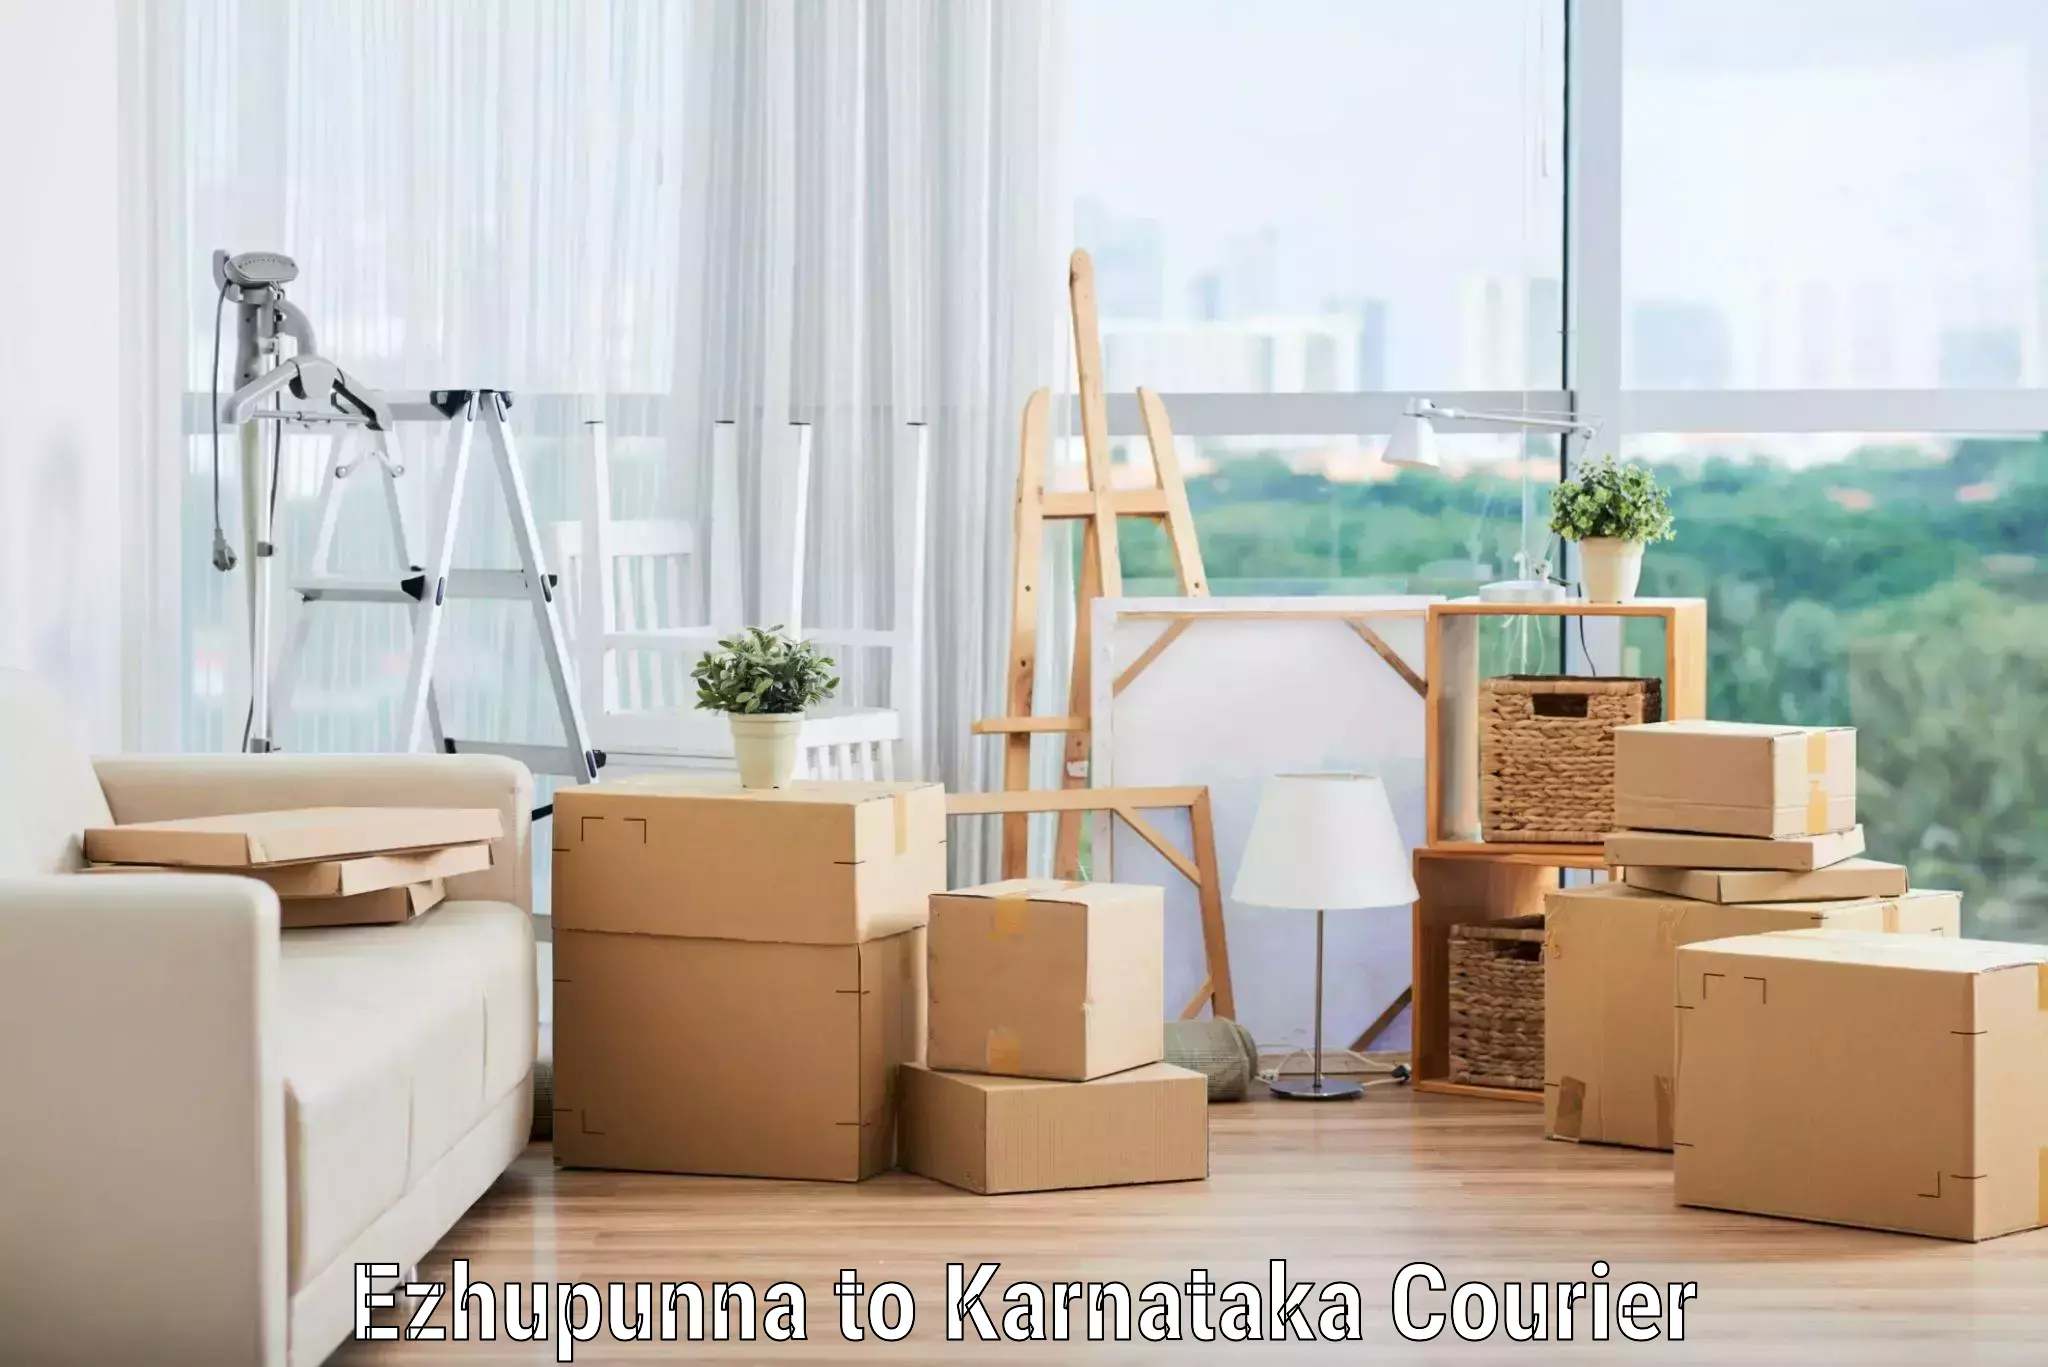 Professional home movers Ezhupunna to Karnataka